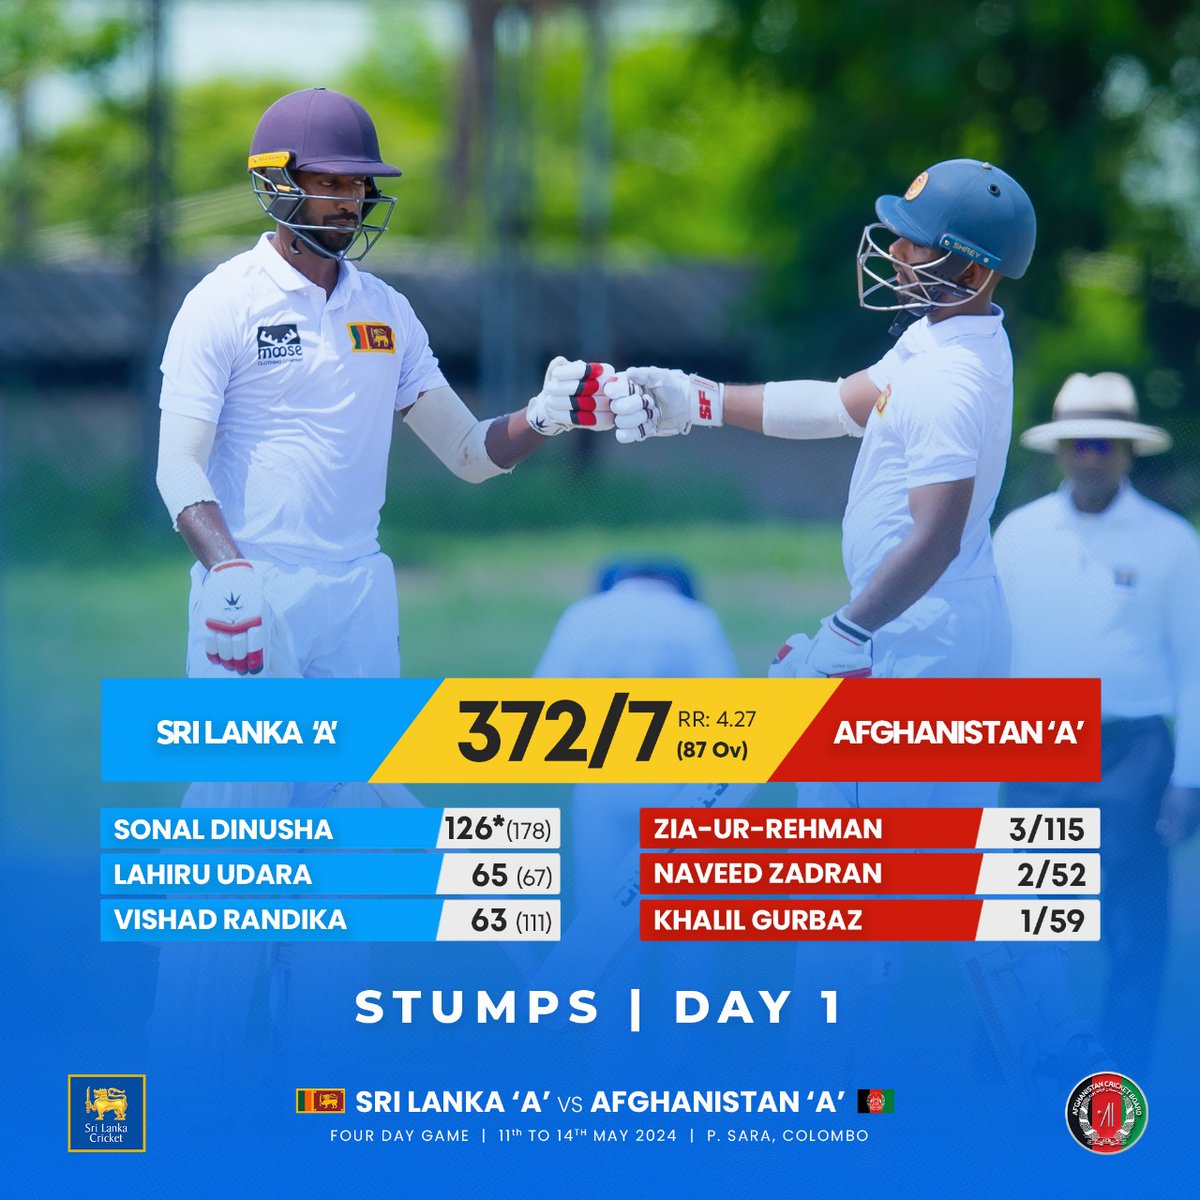 At Stumps on Day One, Sri Lanka 'A' on 372/7. Sonal Dinusha at the crease on 126 unbeaten. #SLATeam #SLvAFG